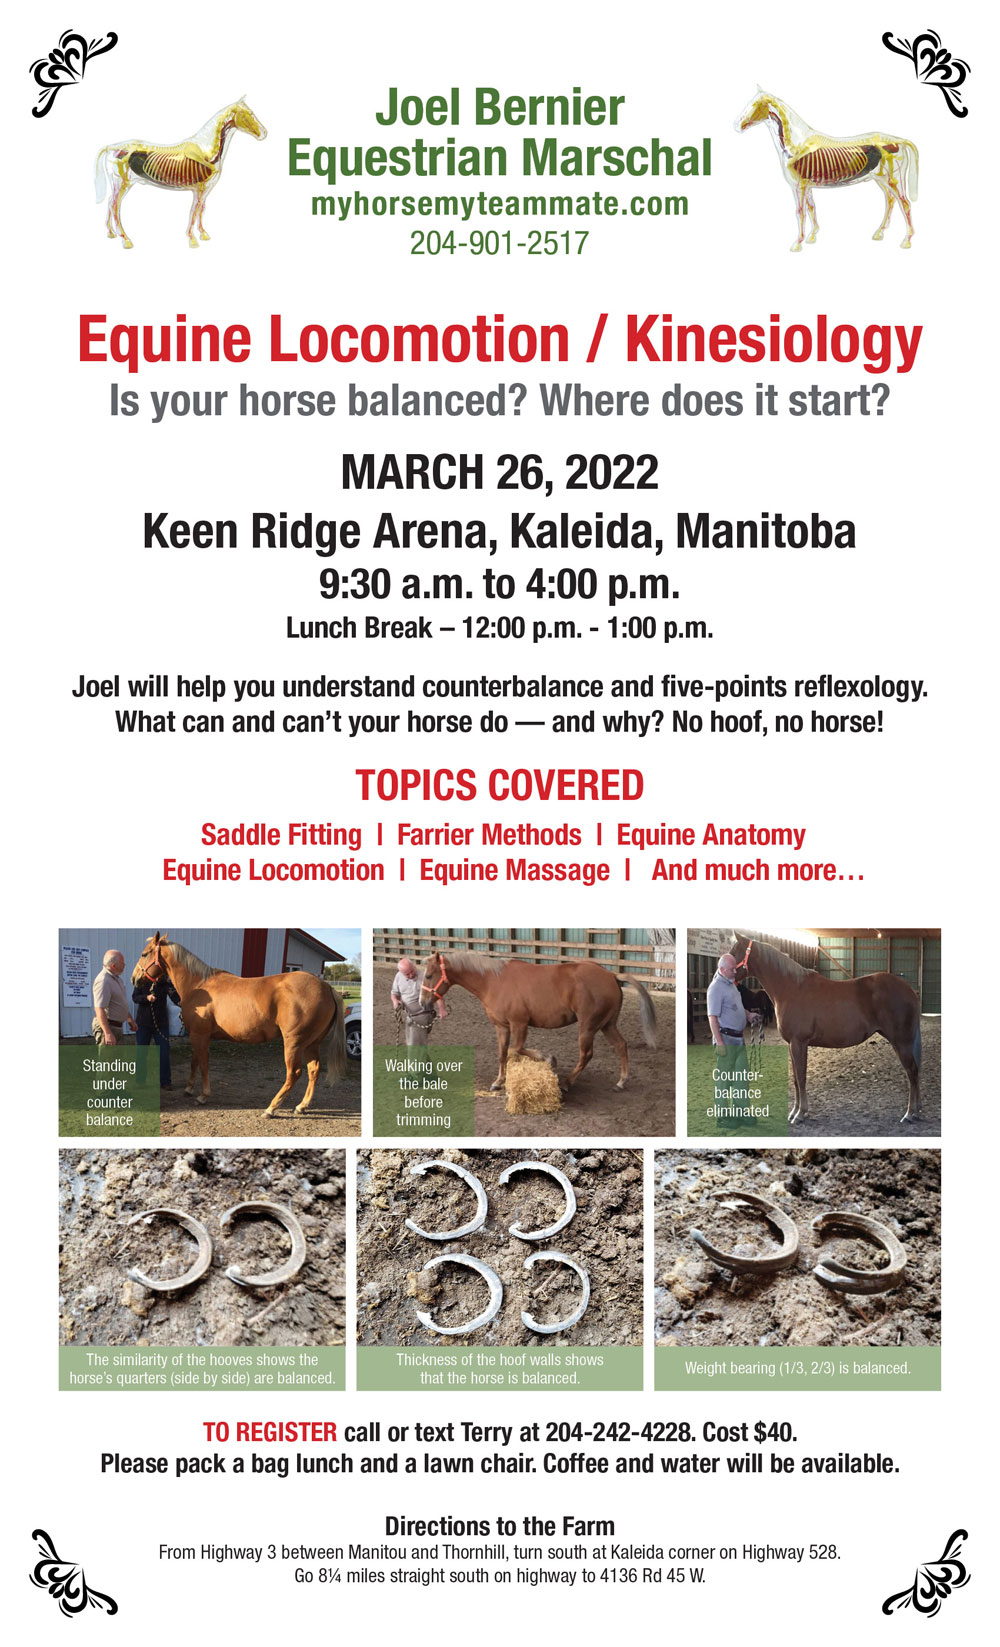 Equine Locomotion / Kinesiology Clinic - March 26, 2022 - Kaleida, Manitoba